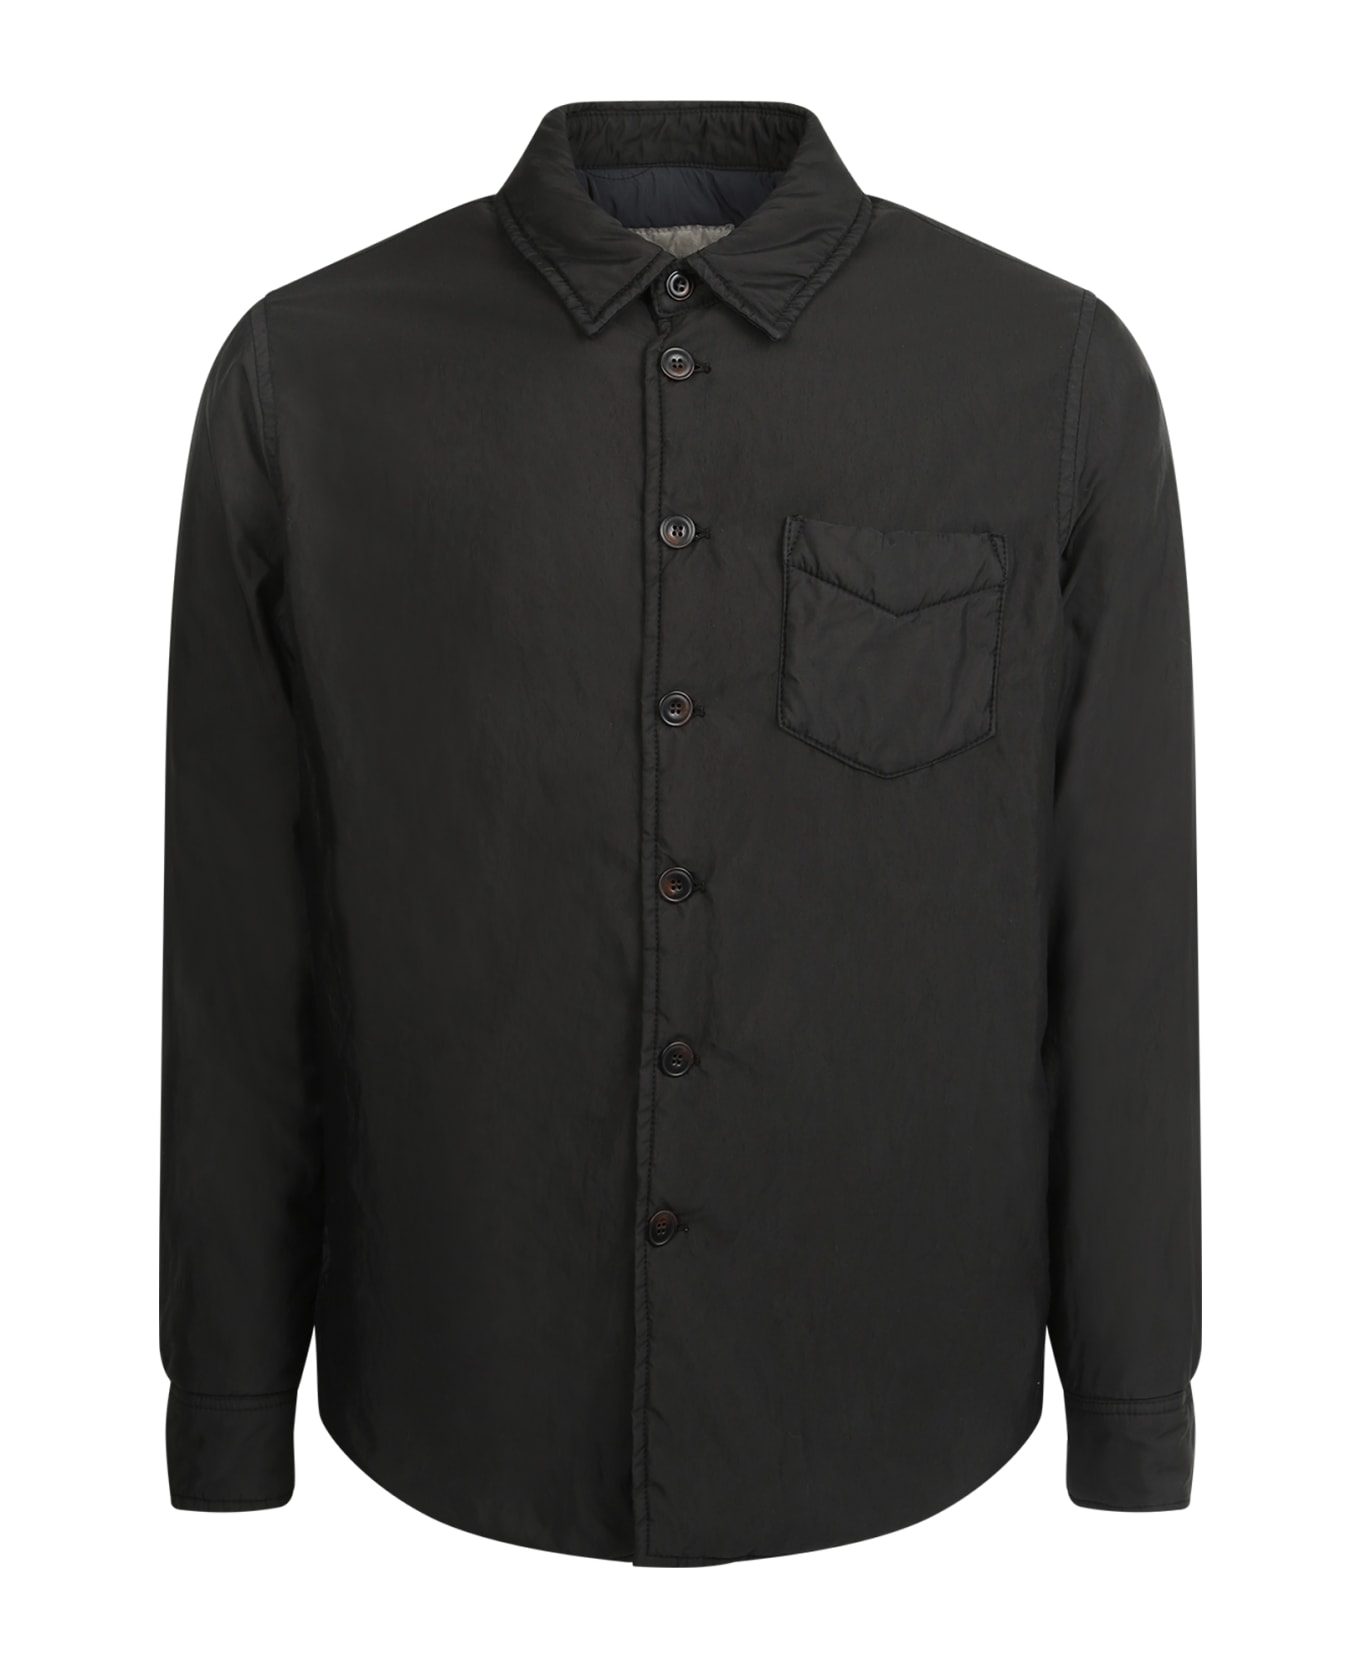 Original Vintage Style Shirt Jacket - Black ジャケット